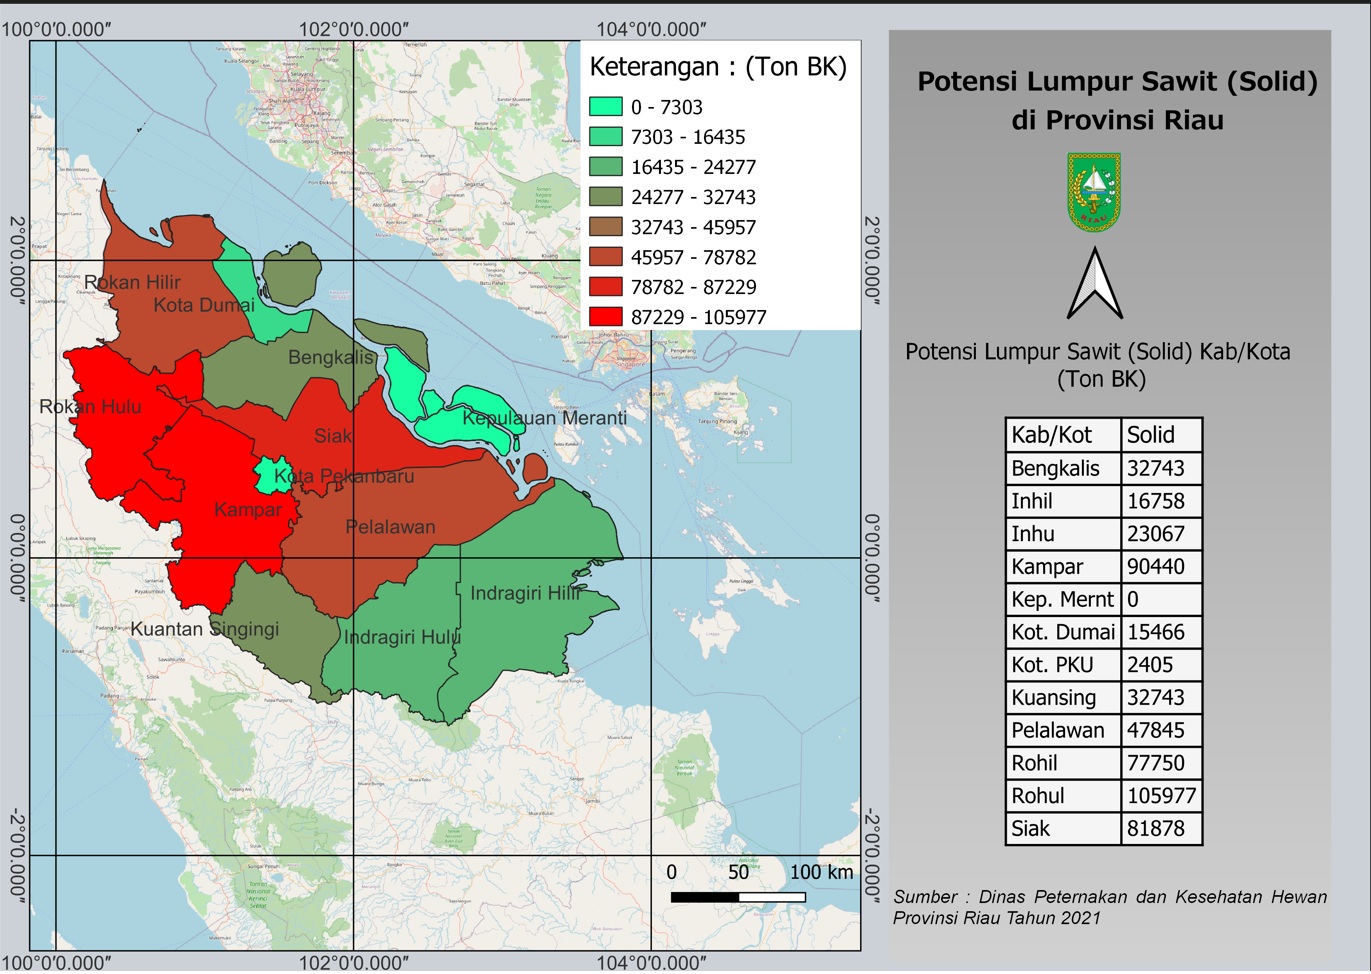 Potensi Lumpur Sawit (Solid) Provinsi Riau